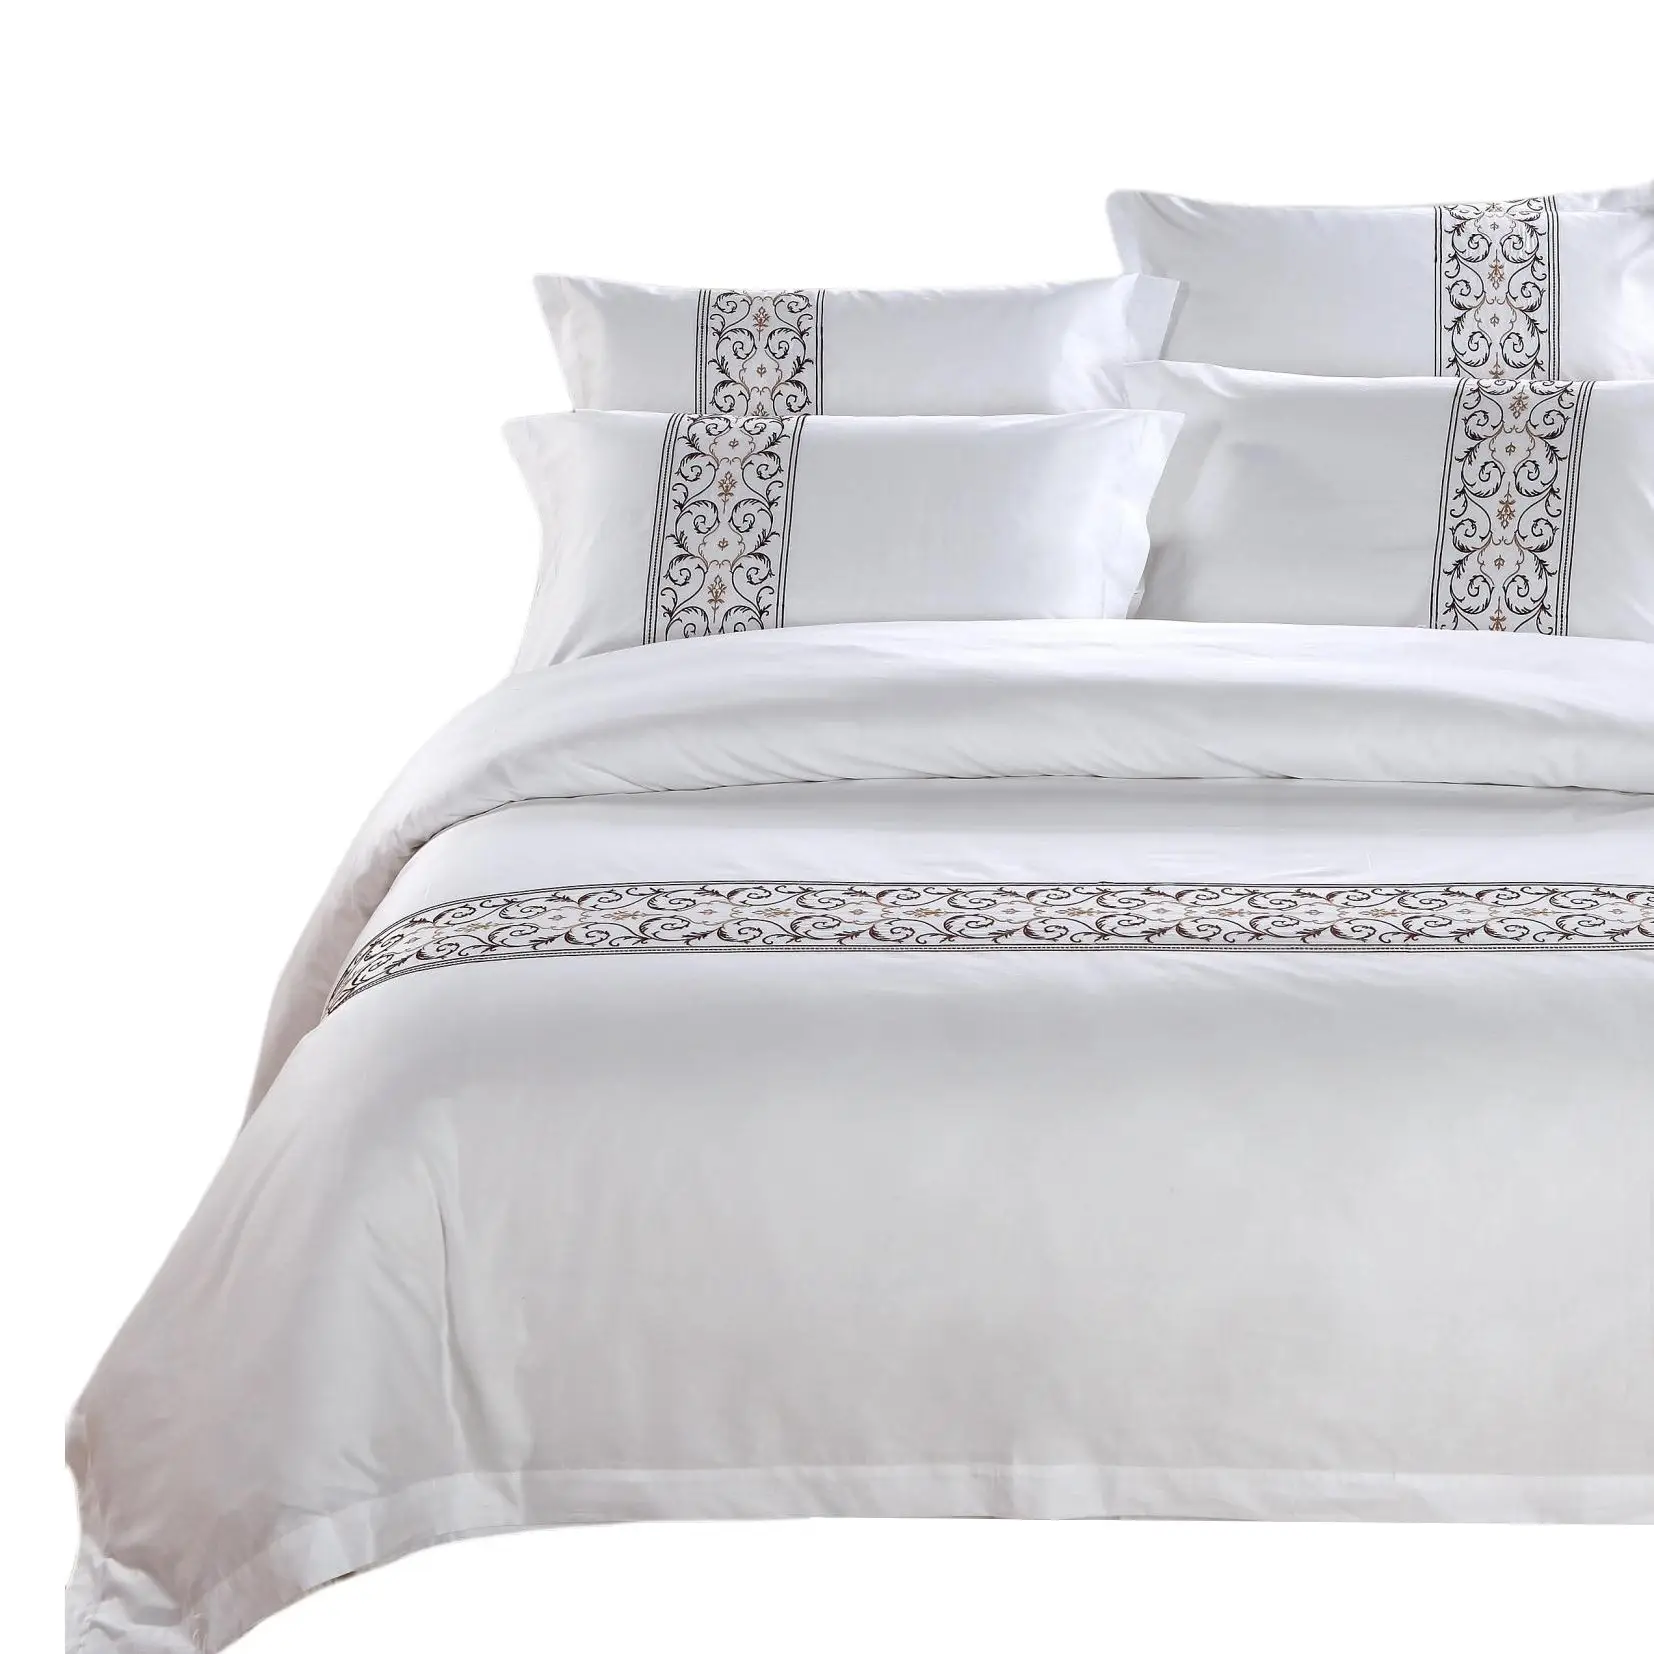 Embroidery Luxurious 100% cotton Hotel Duvet cover set quilt cover pillow shaw bedskirt bedsheet